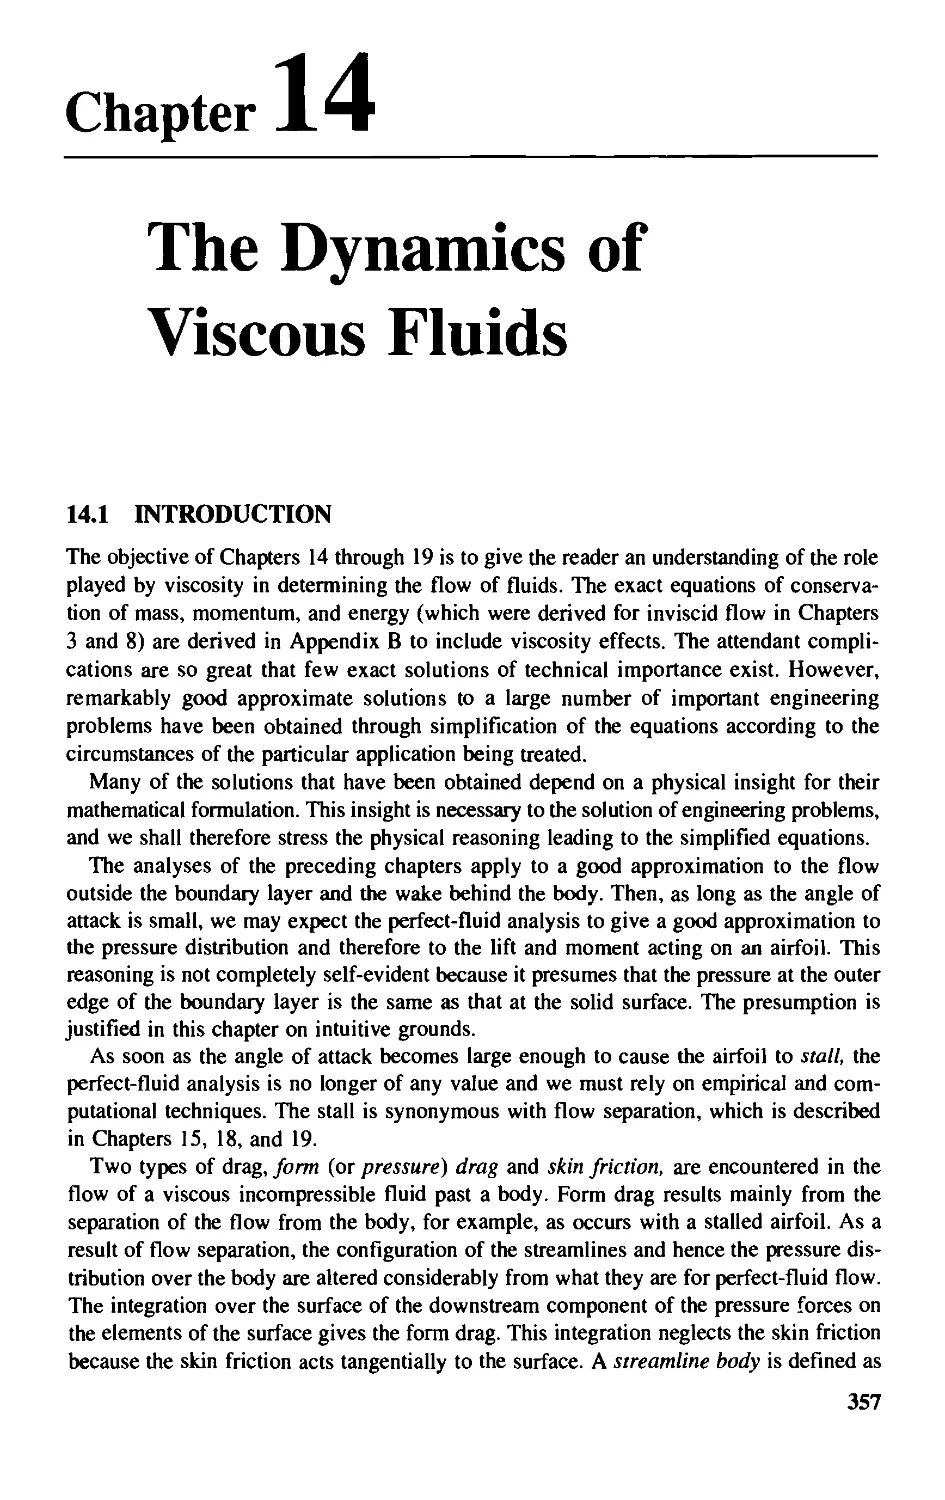 Chapter 14 - The Dynamics of Viscous Fluids